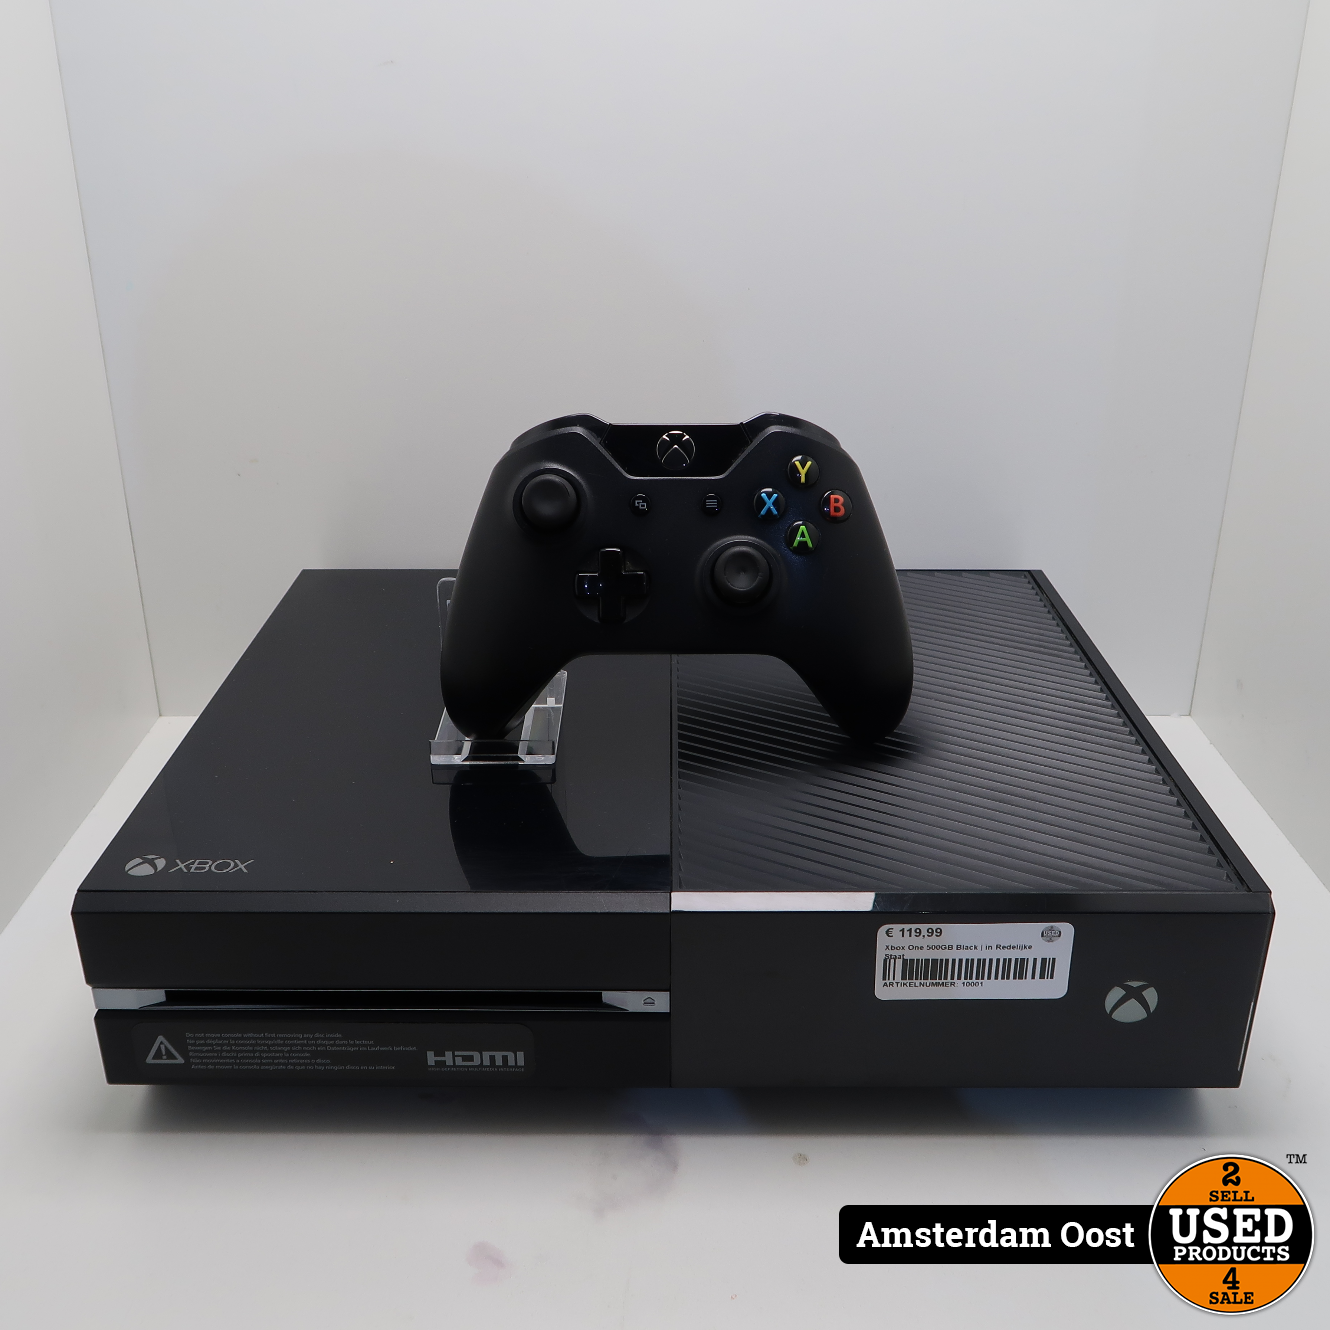 Afhaalmaaltijd IJver Brood Xbox One 500GB Black | in Redelijke Staat - Used Products Amsterdam Oost